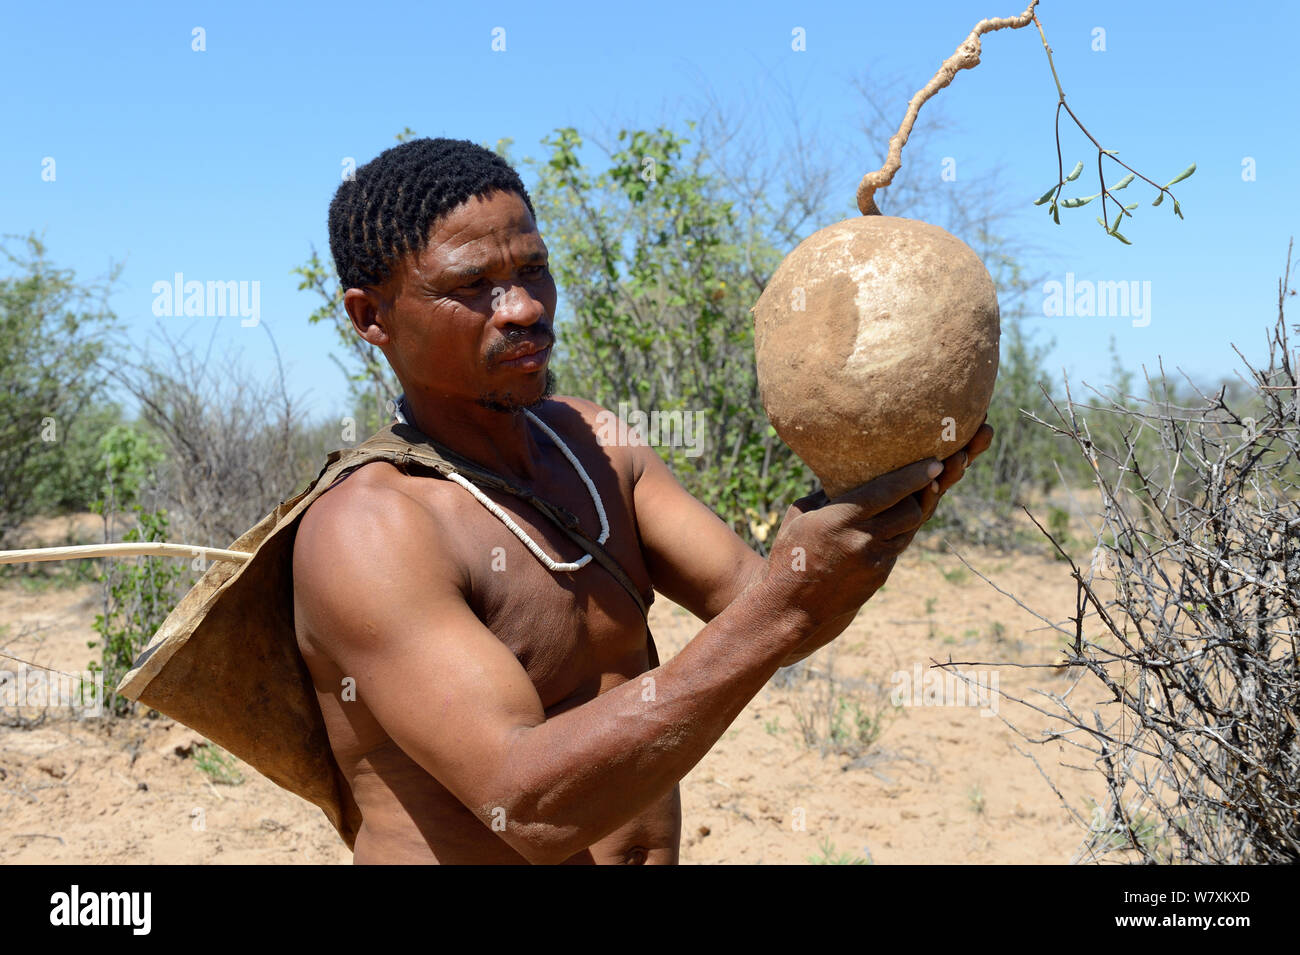 Naro San Bushman holding a milkplant root (Raphionacme sp) which has fibers containing a juice which can be drunk. Kalahari, Ghanzi region, Botswana, Africa. Dry season, October 2014. Stock Photo